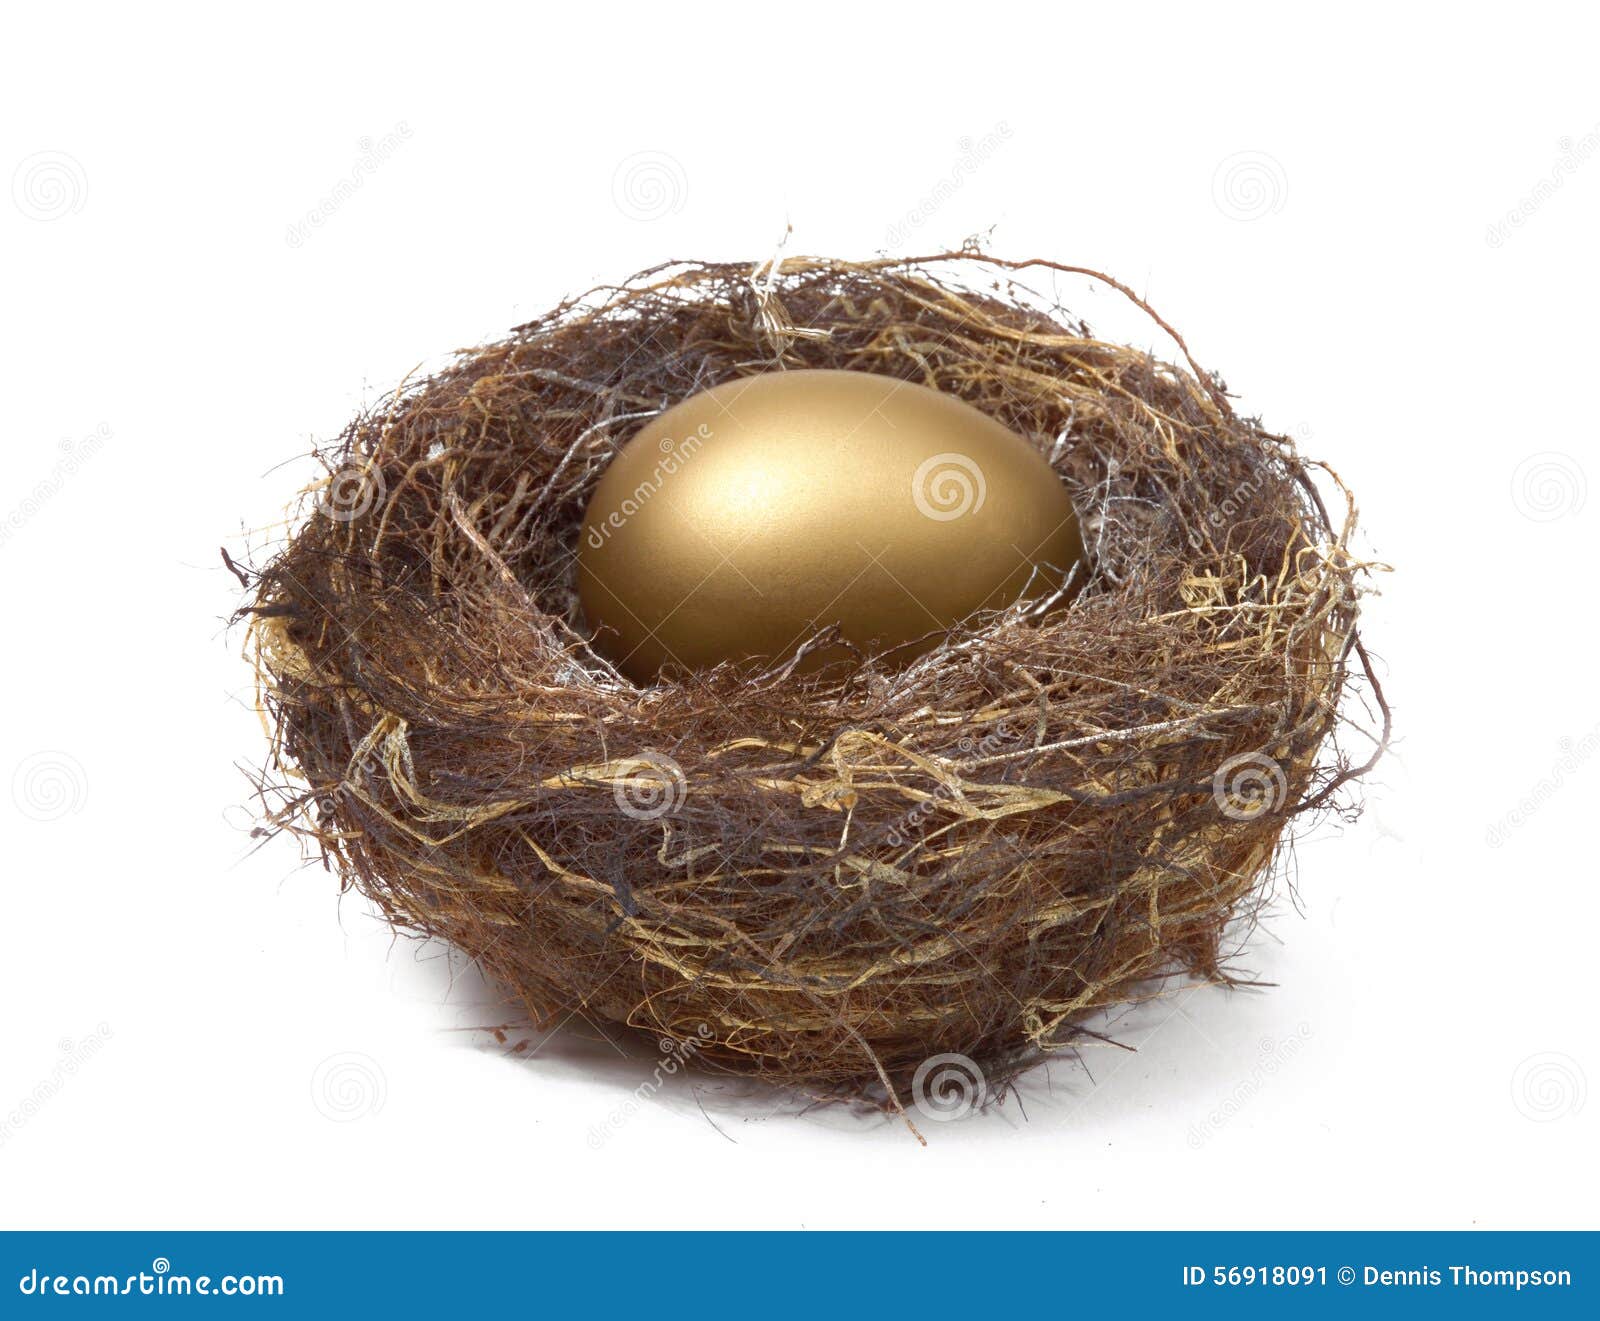 nest egg saving estate retirement fund financial wealth planning